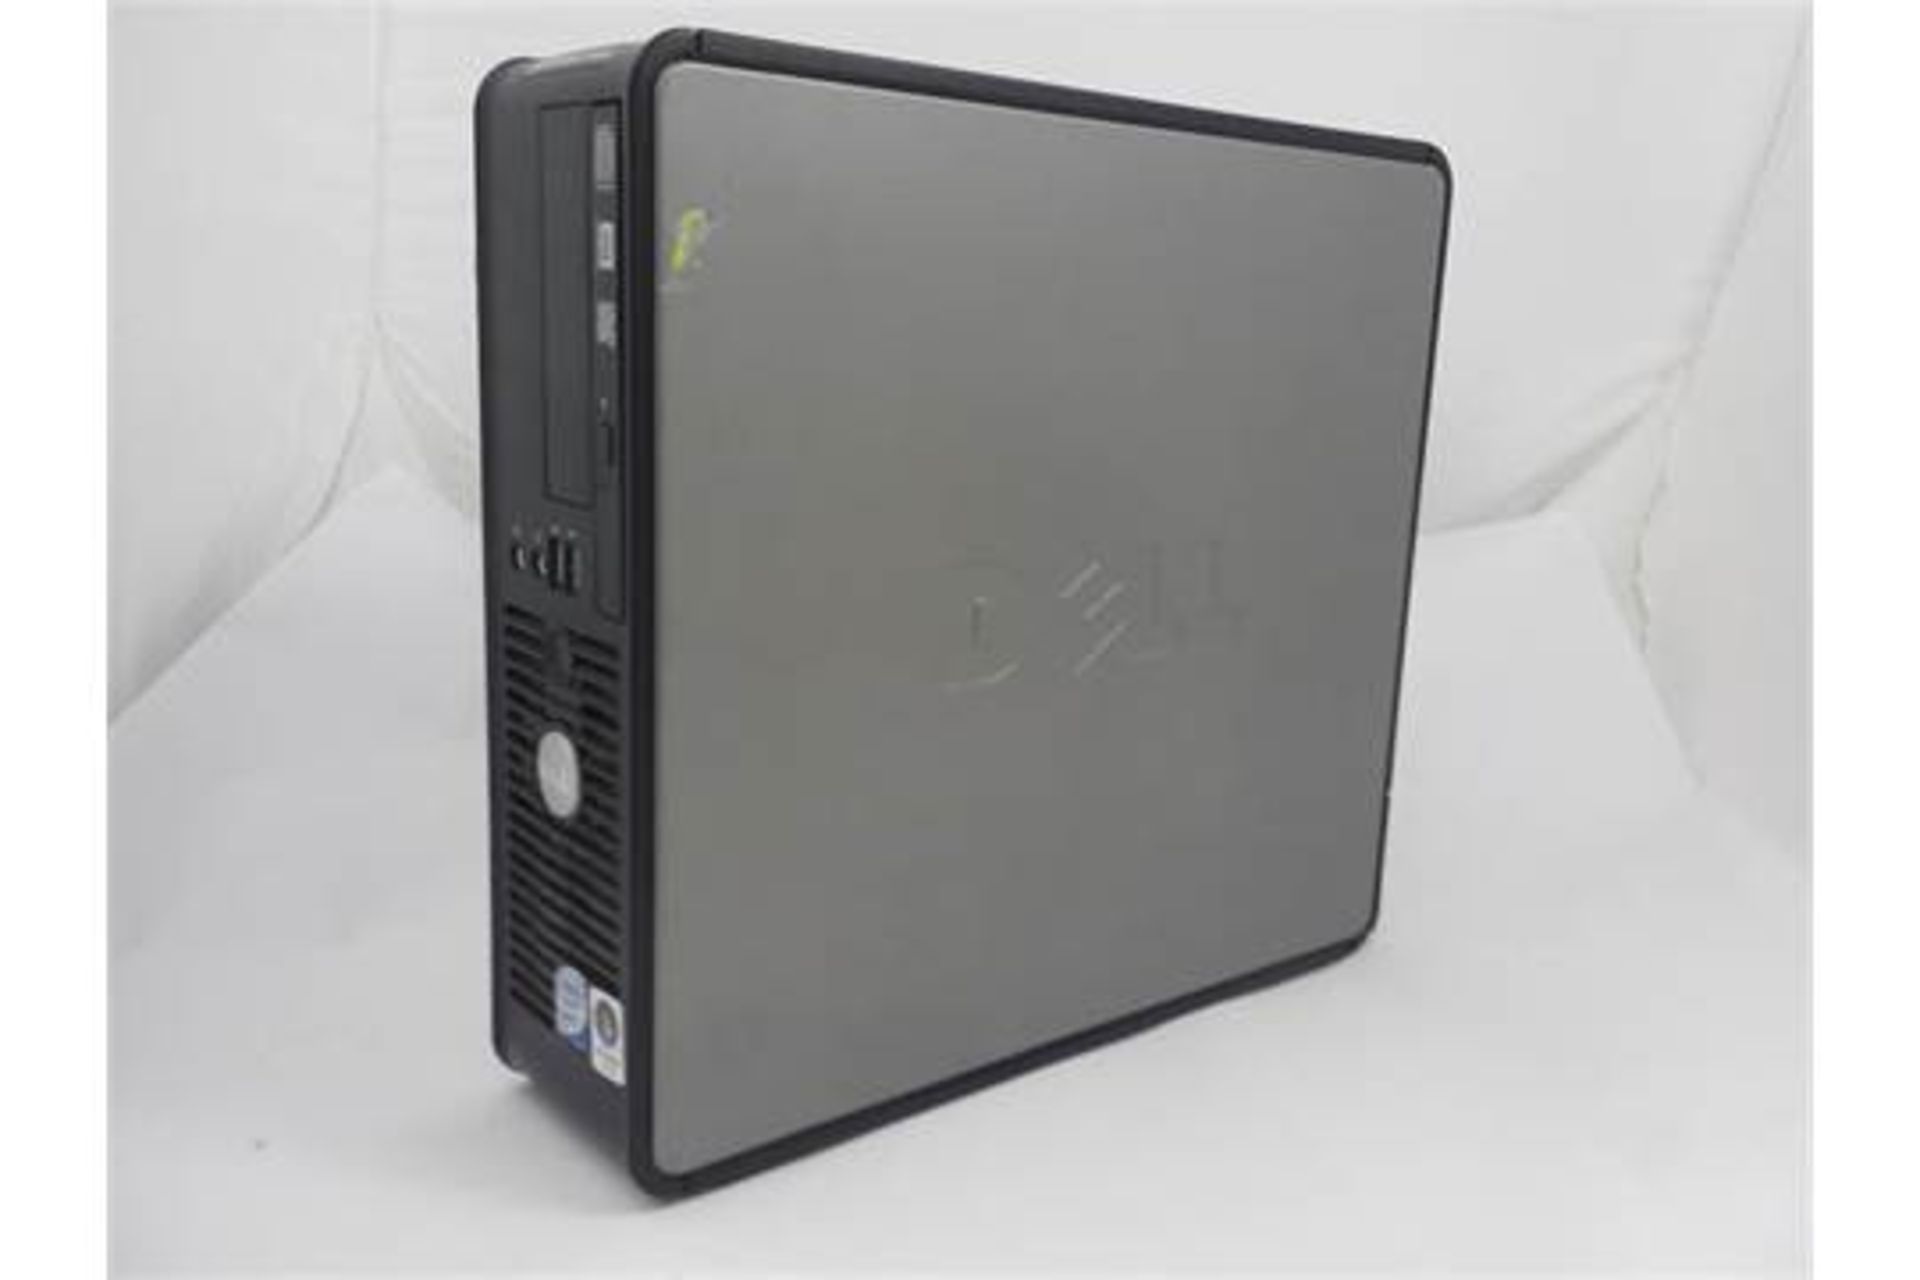 Dell Optiplex 755 - Ultra Small Form Factor PC - Intel 2.4GHz Processor. 2GB MEMORY. 80GB HARD - Image 3 of 4